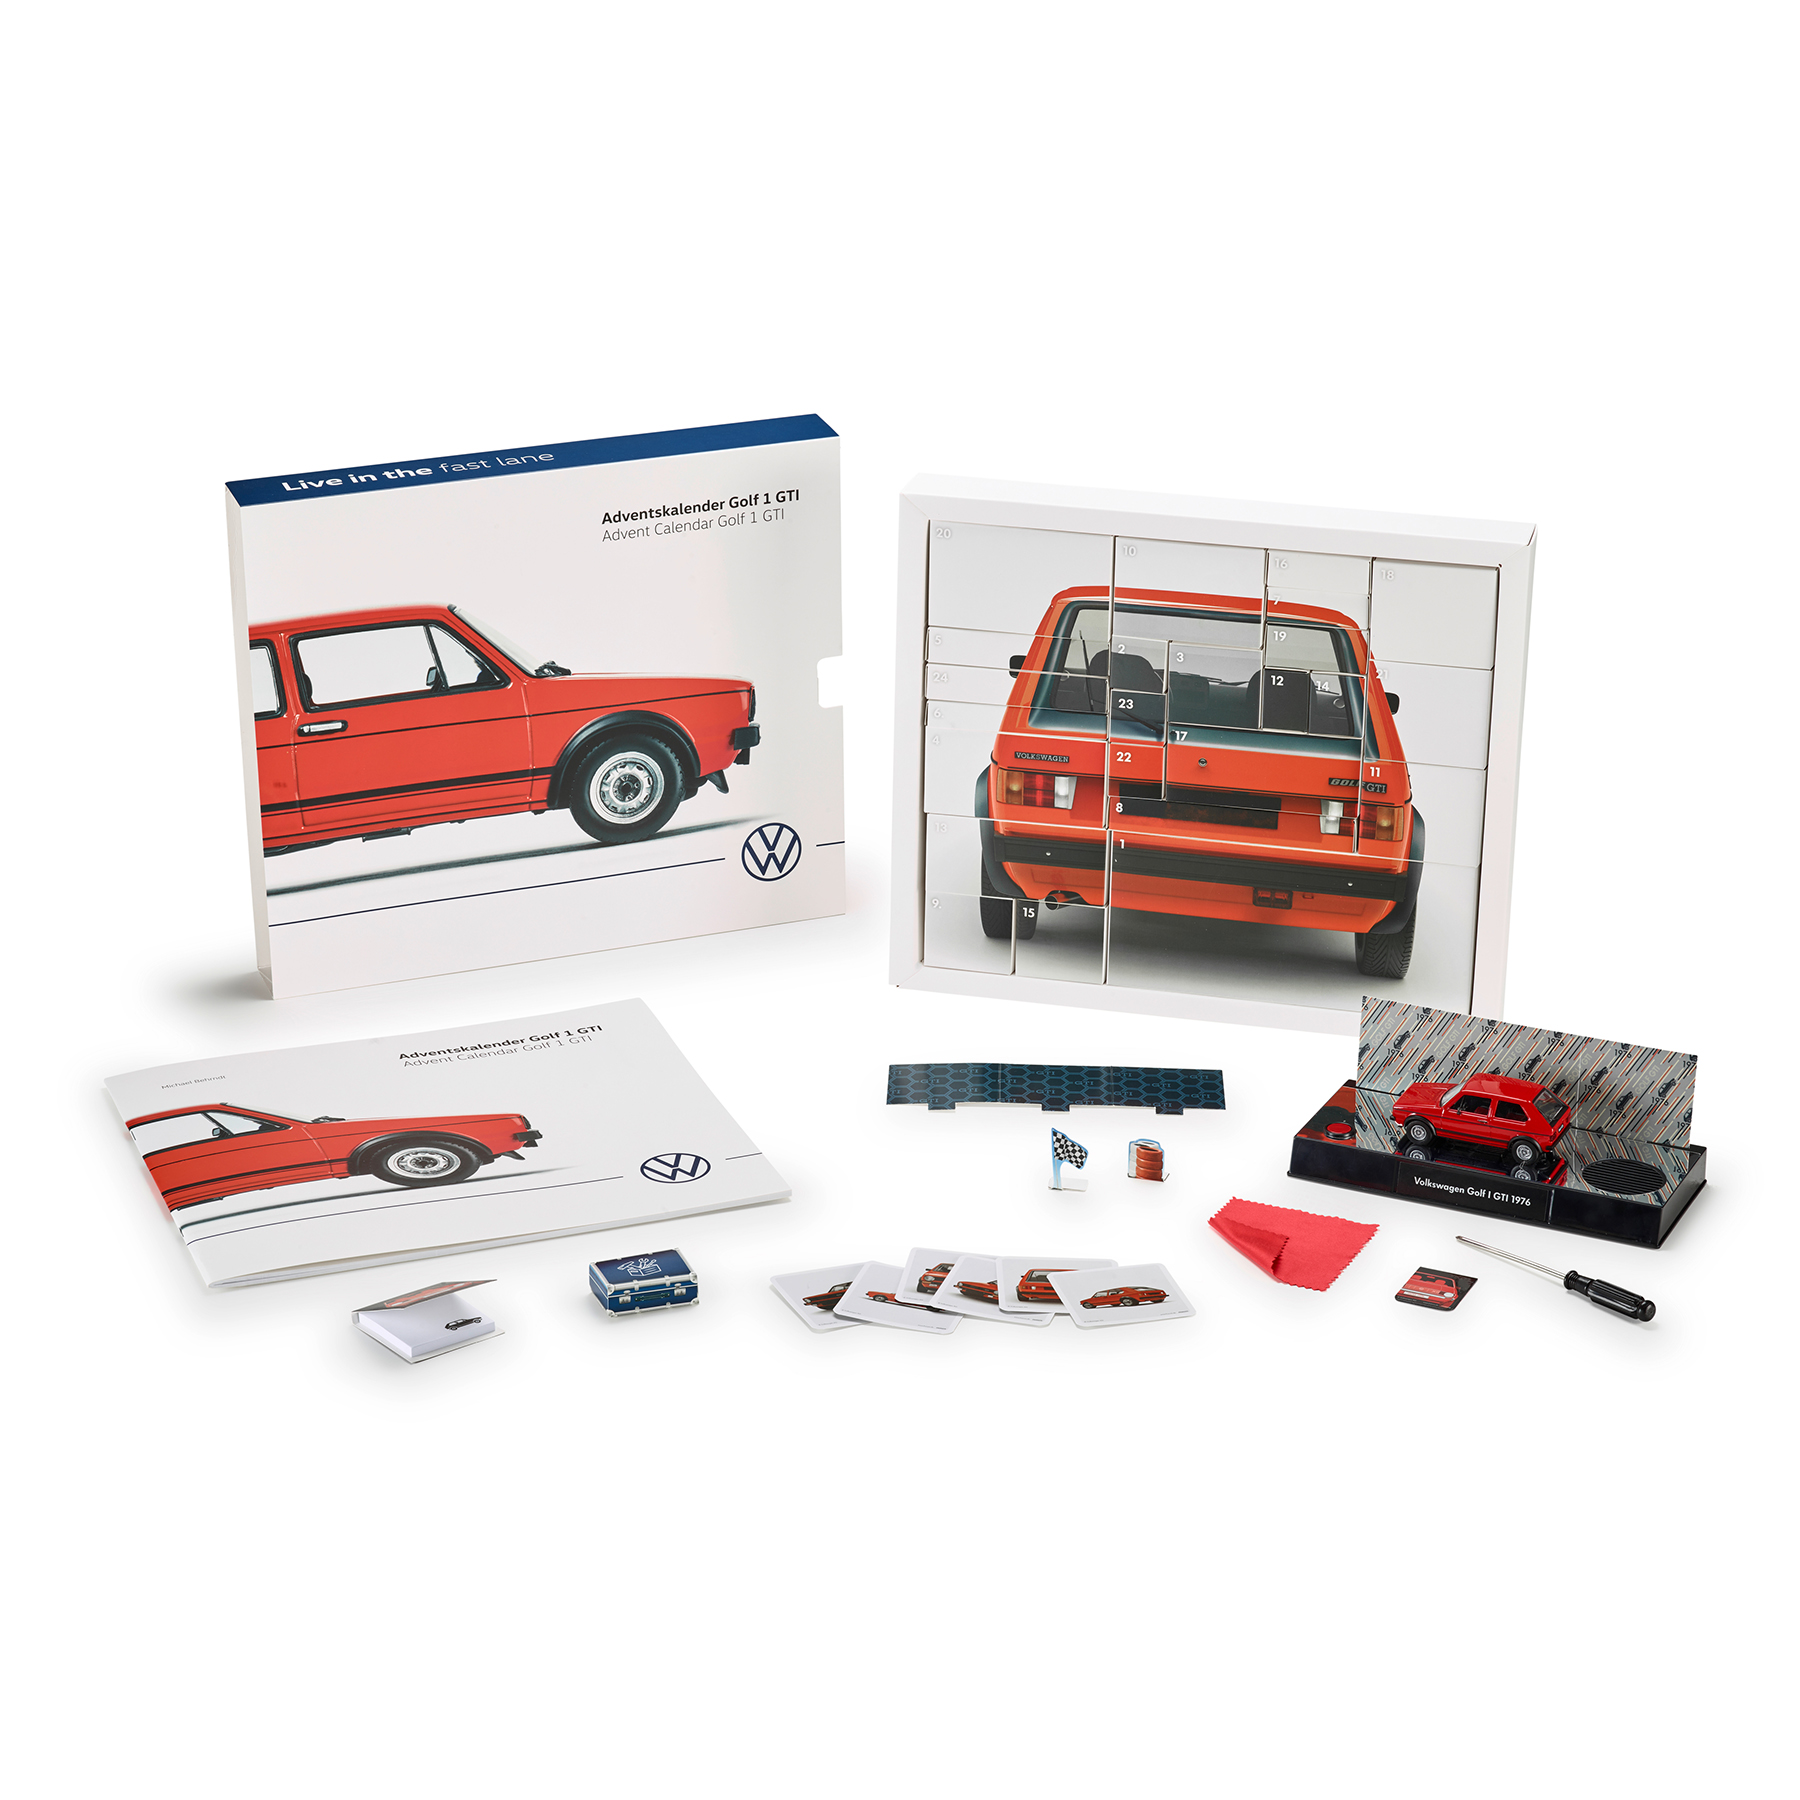 Original VW Adventskalender Golf 1 GTI Kalender Modellauto 1:43 rot Weihnachtskalender